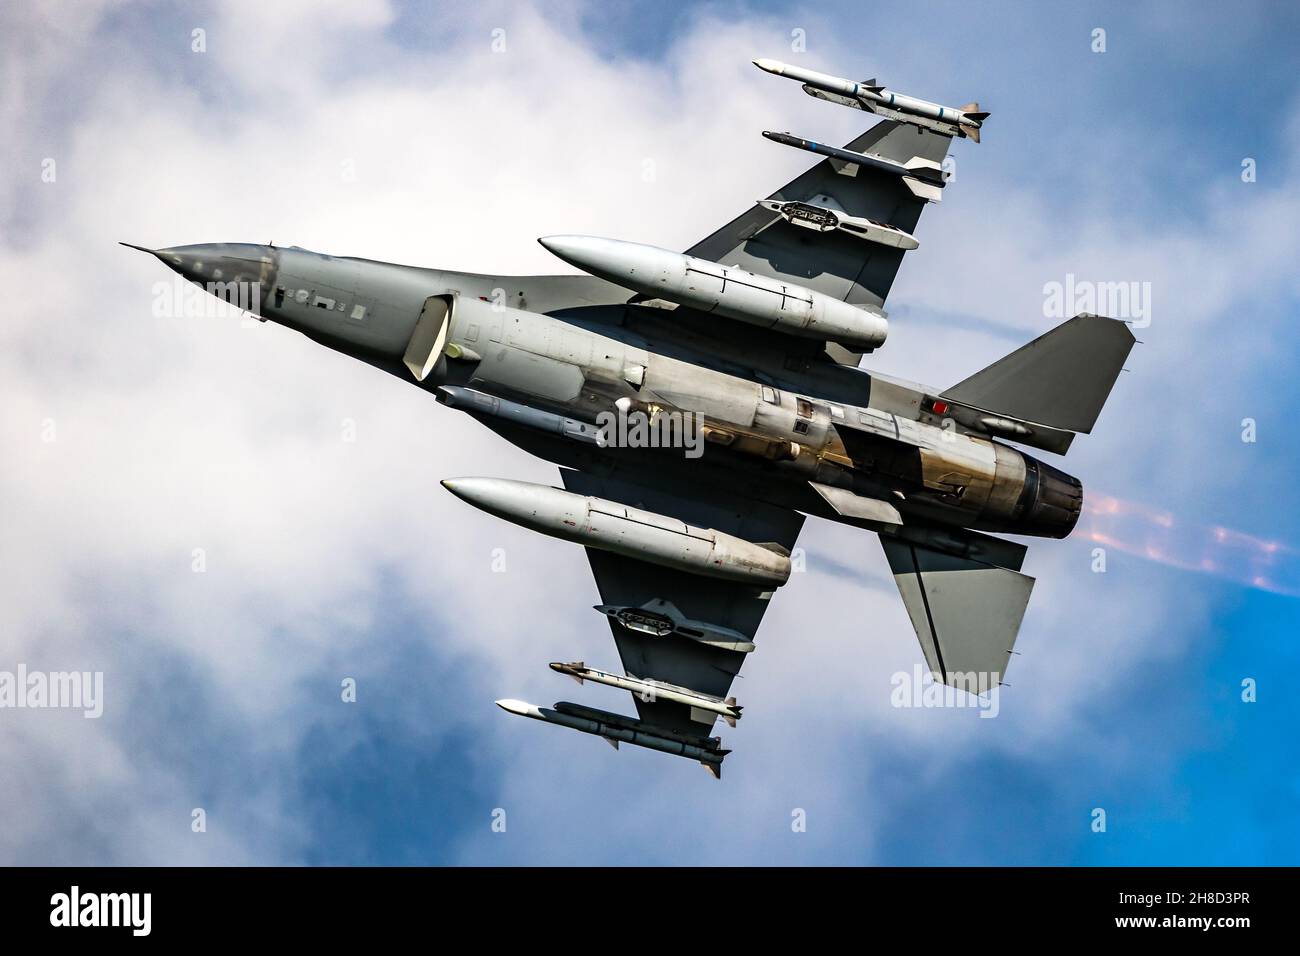 Militärische Luftwaffe Kampfjet Abfangflugzeug im Vollflug. Stockfoto